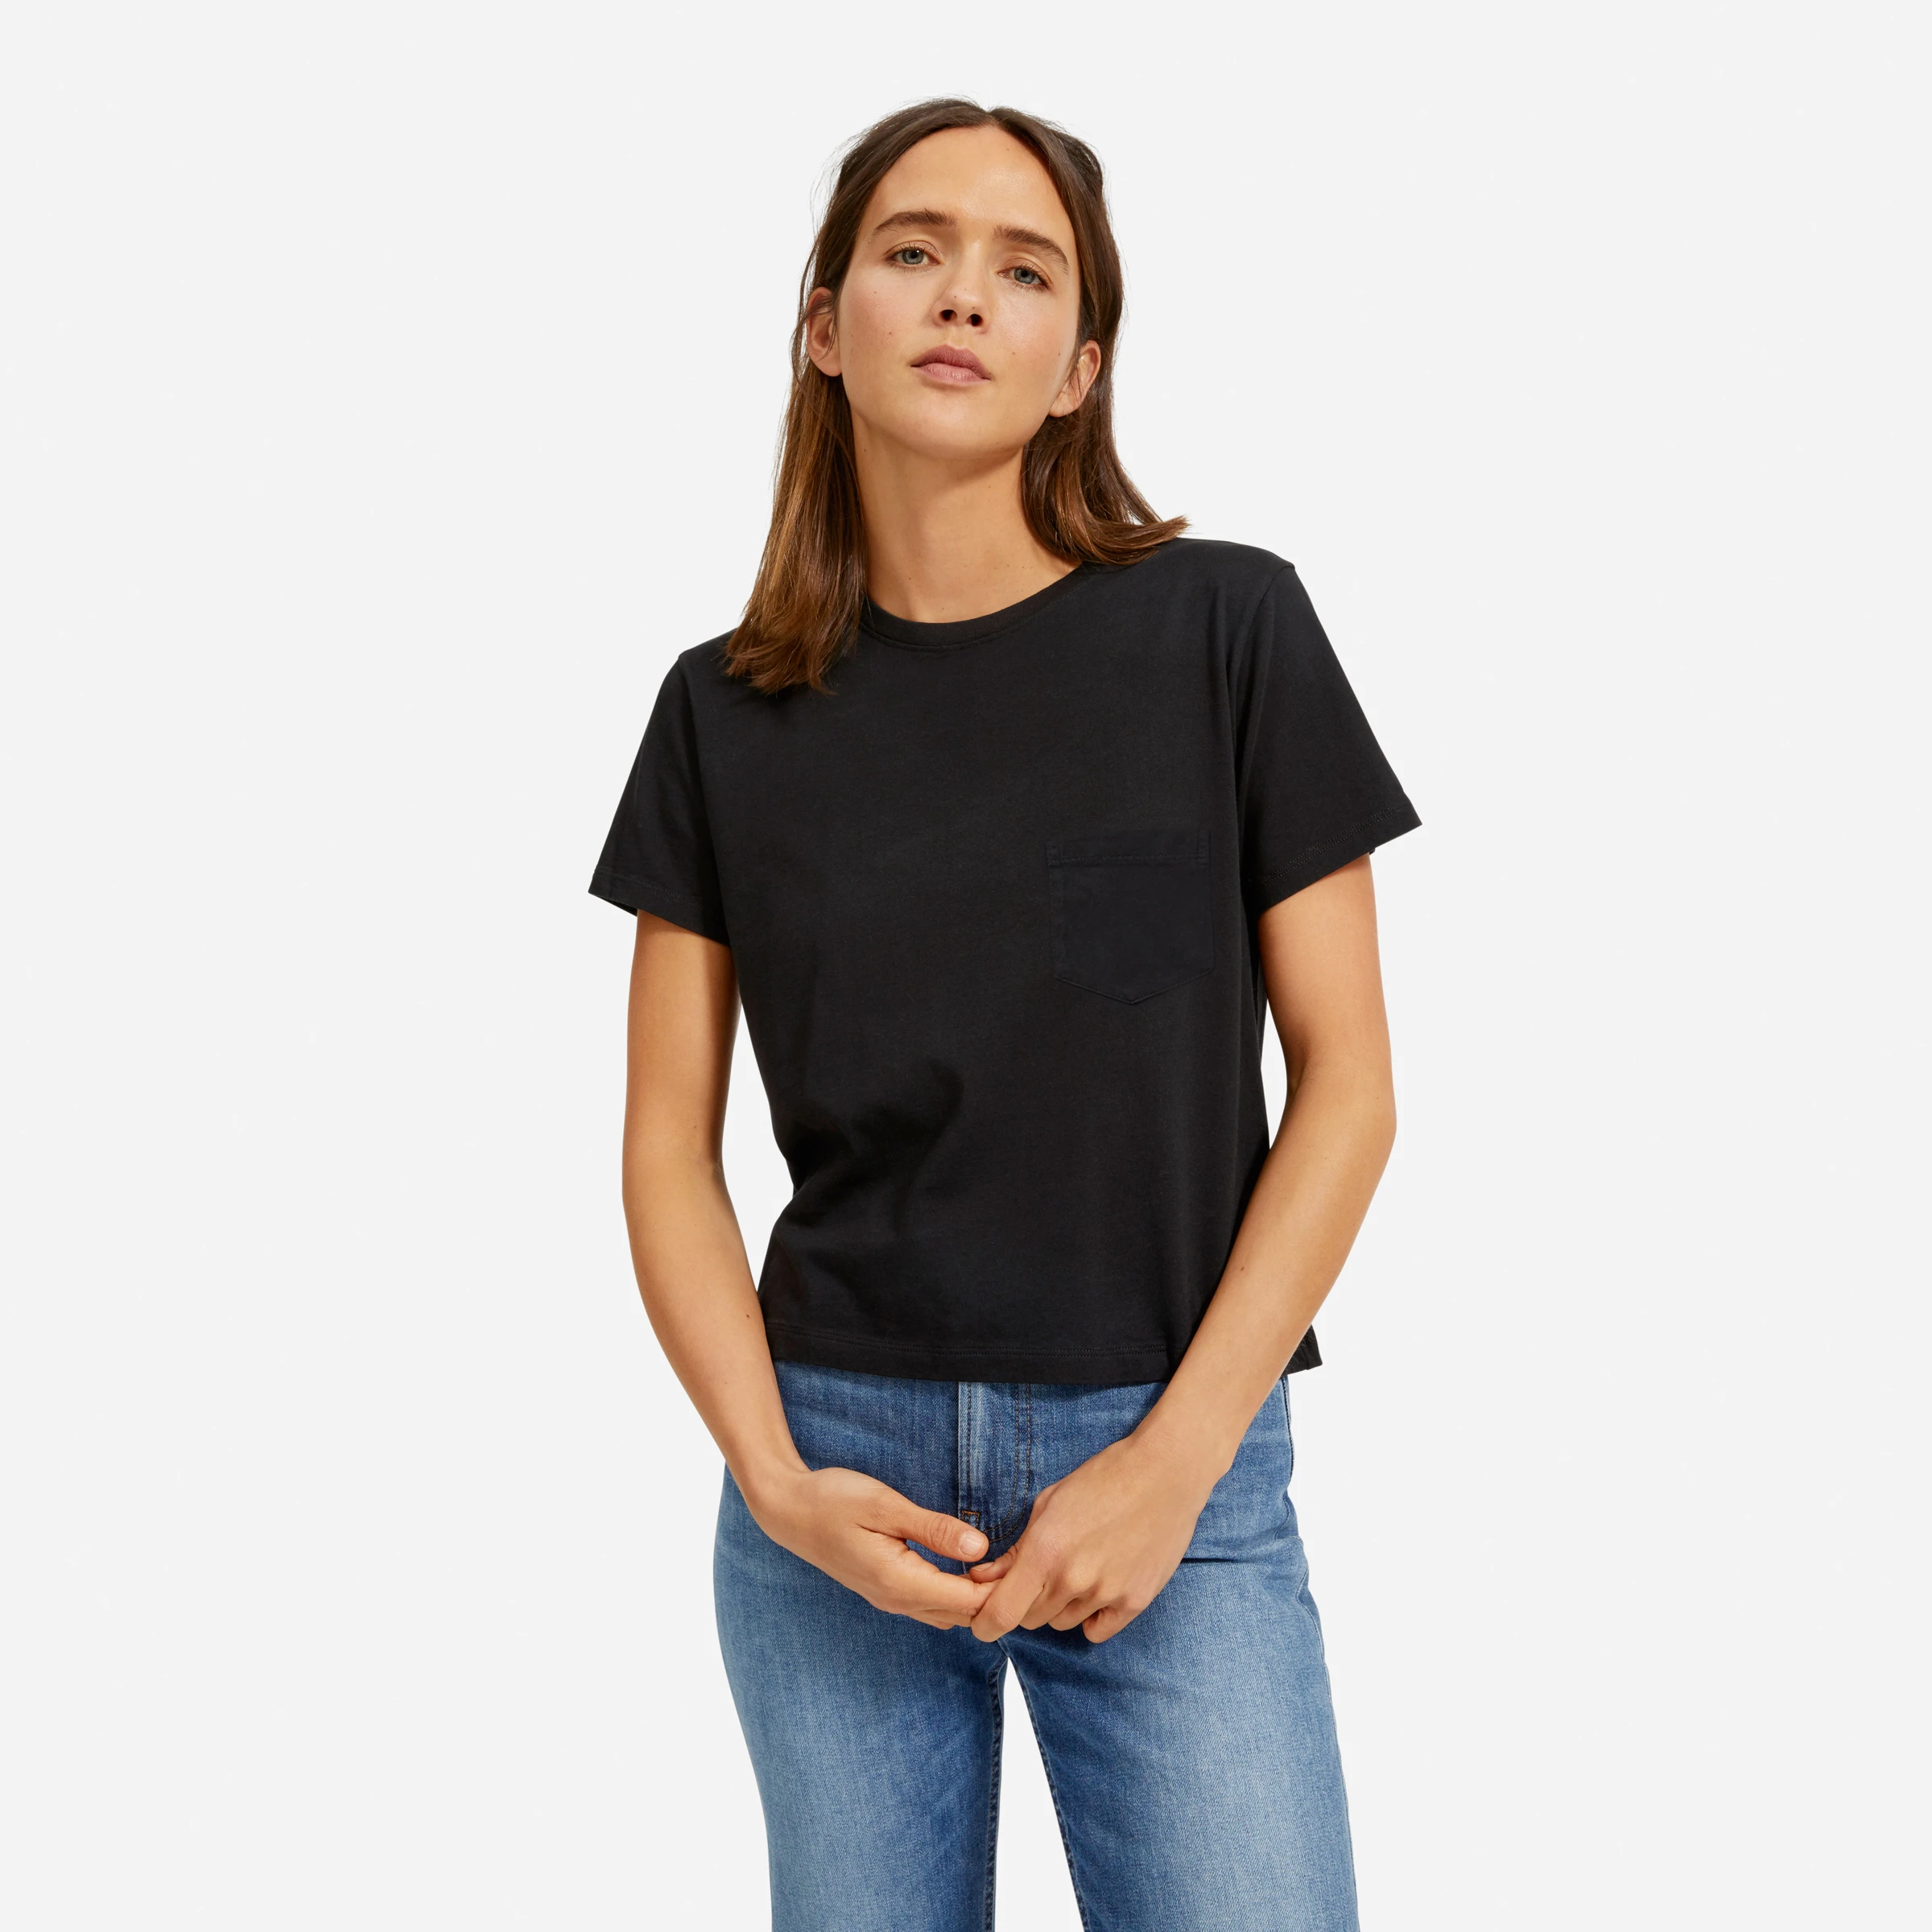 Verouderd knal zondag T shirt women black, 59% af geweldige deal - findyoursoulshine.com